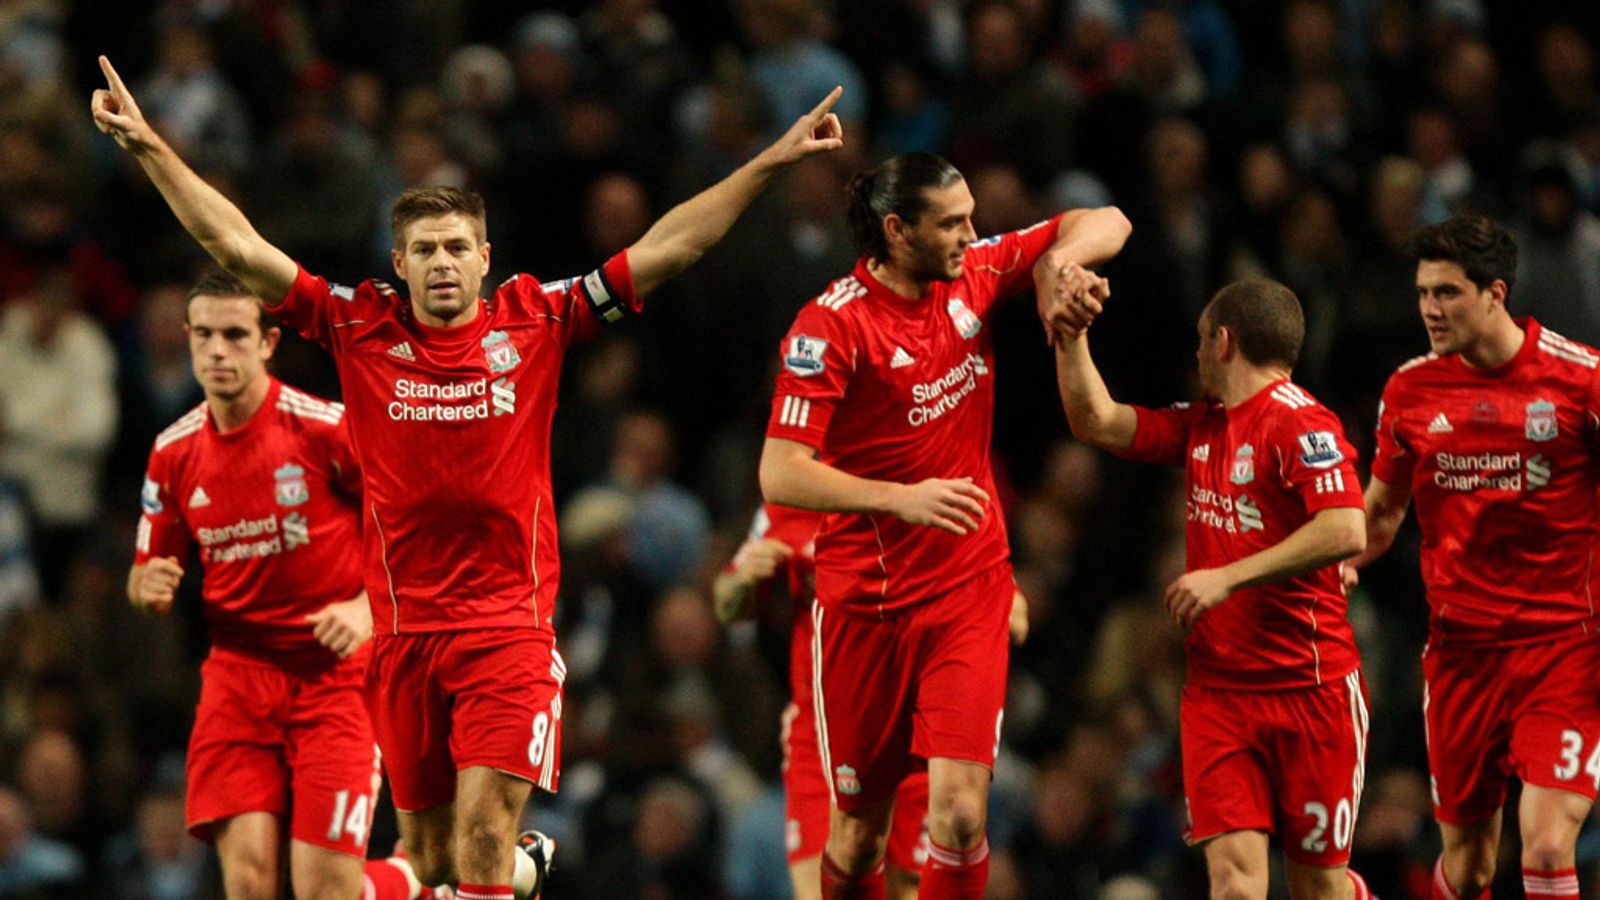 Man City 0 - 1 Liverpool - Match Report & Highlights